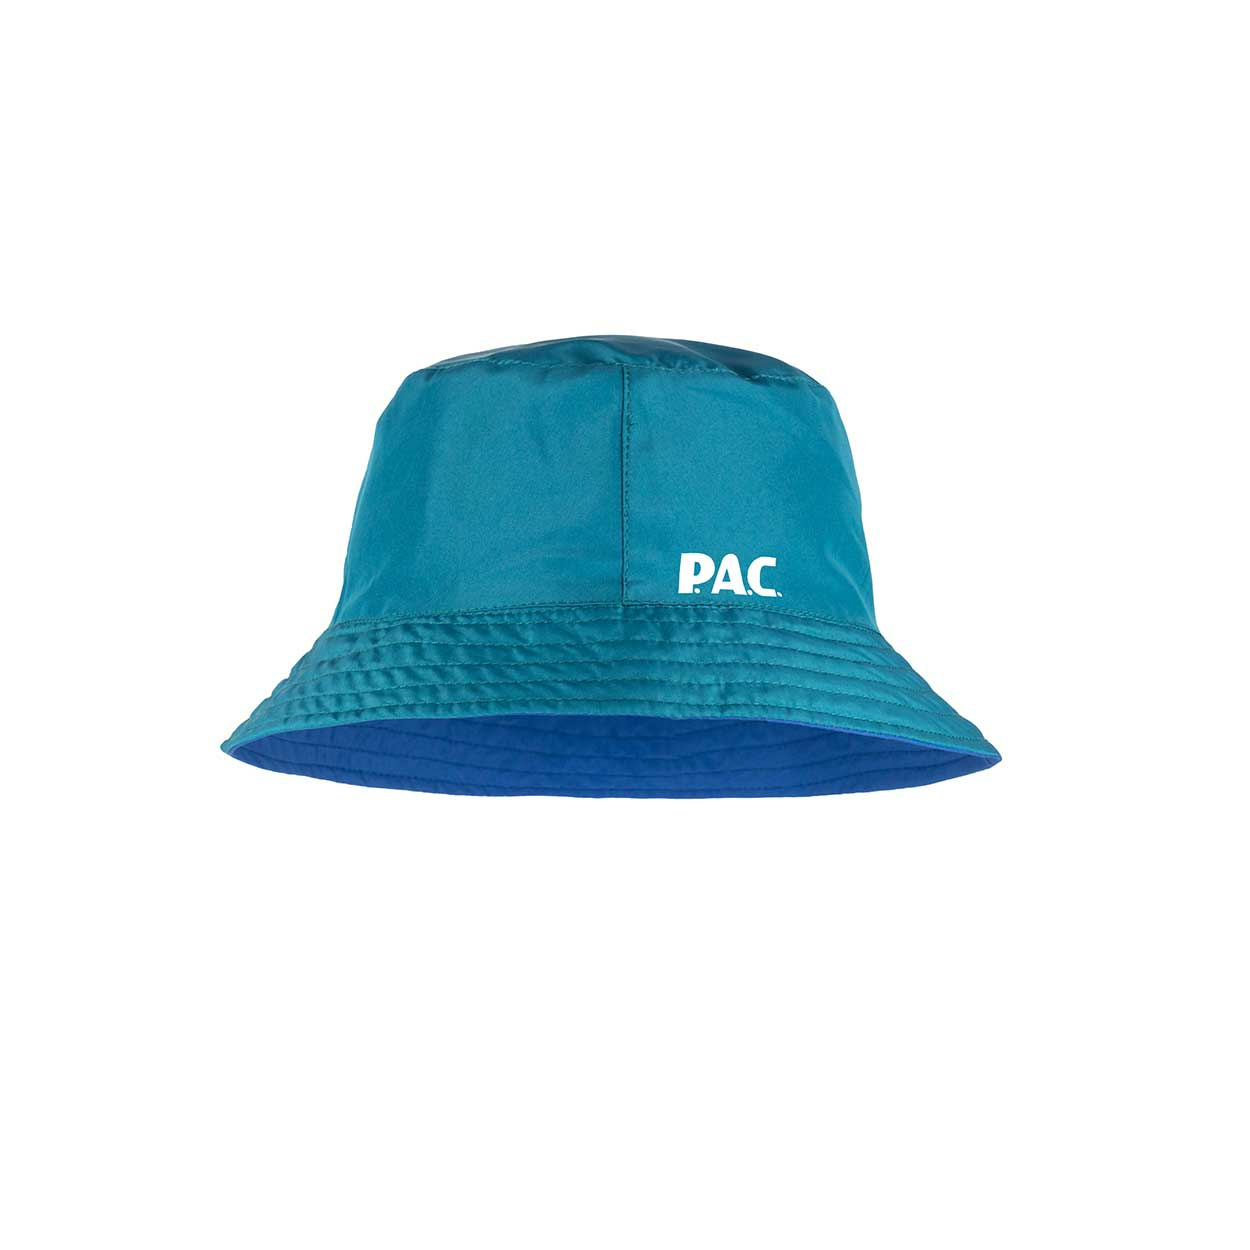 PAC Bucket Hat Ledras 